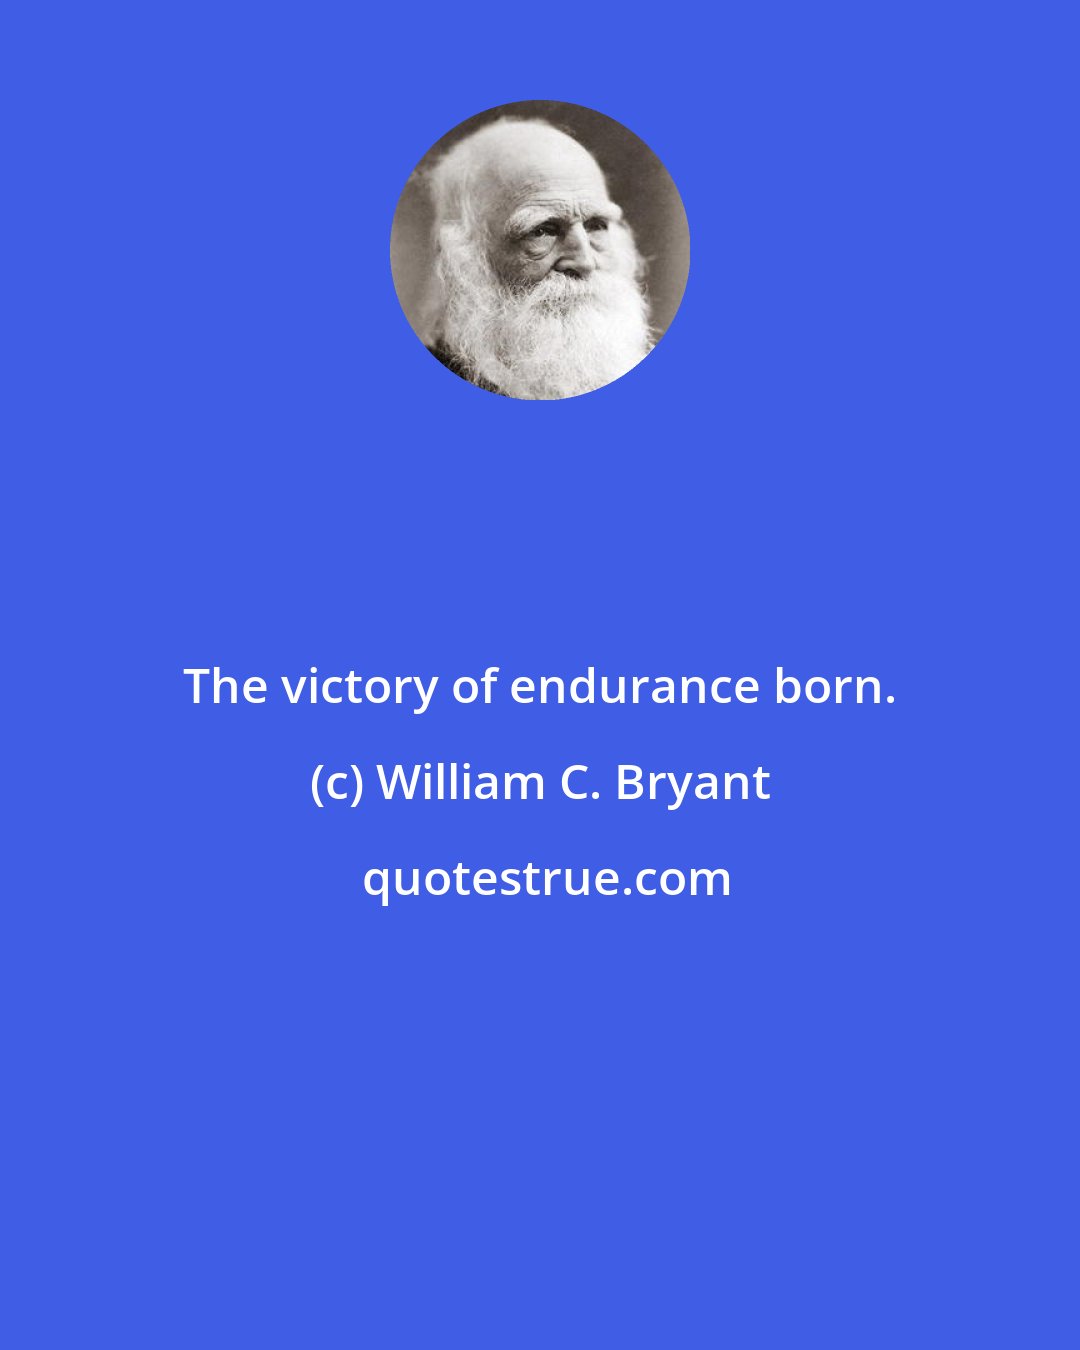 William C. Bryant: The victory of endurance born.